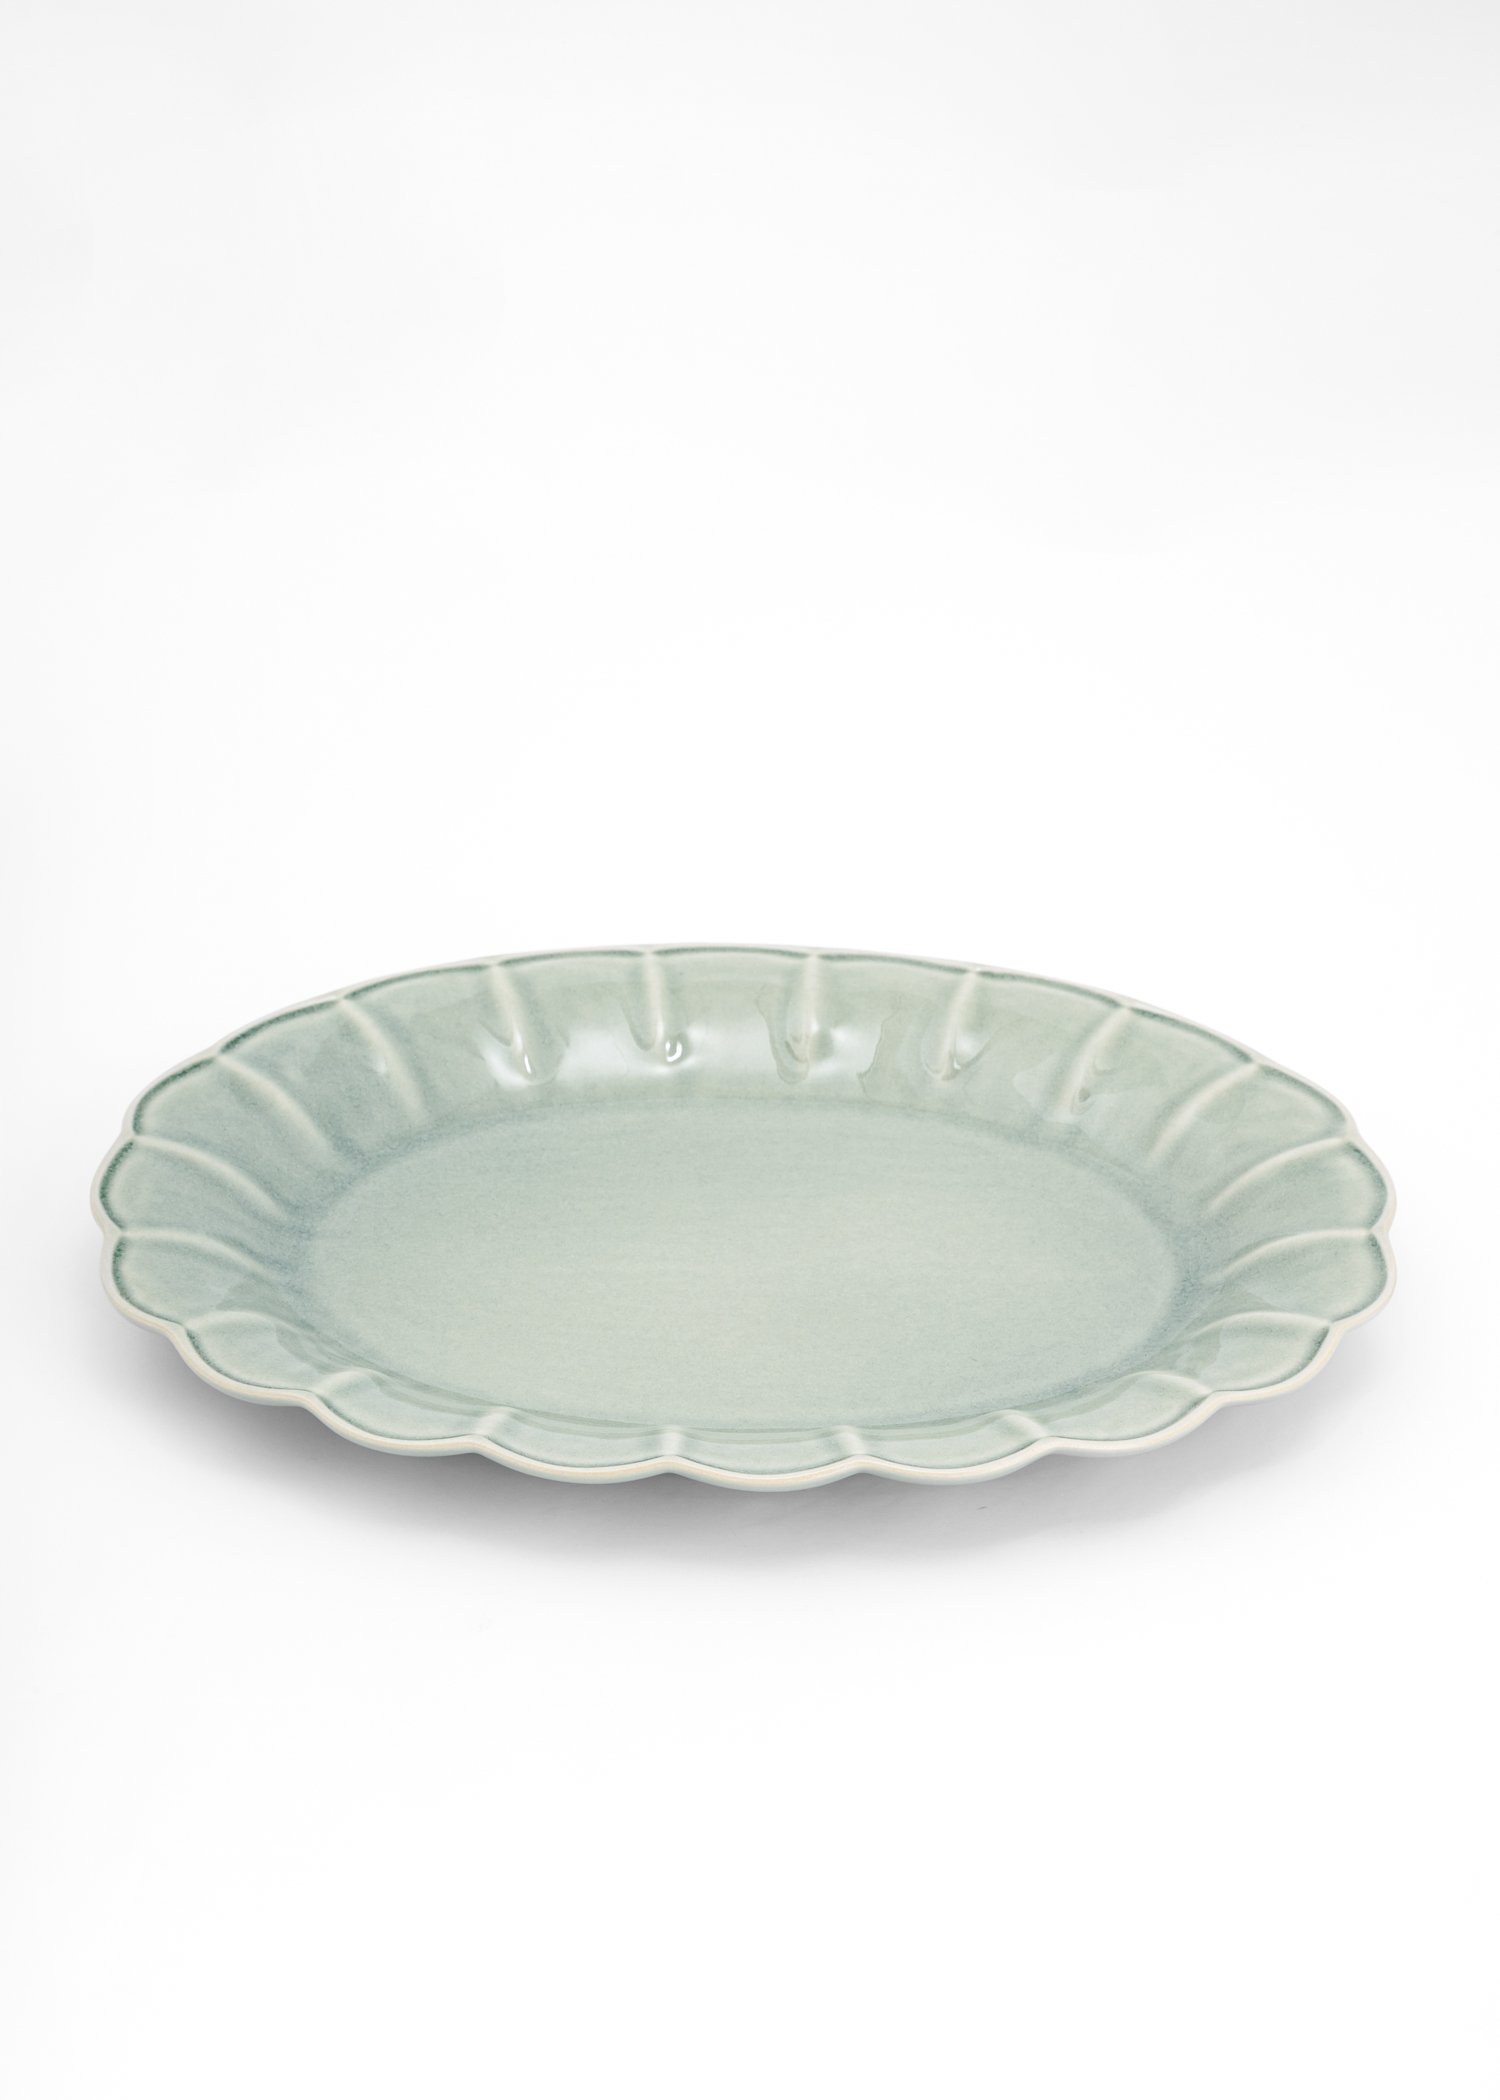 Stoneware wavy serving plate